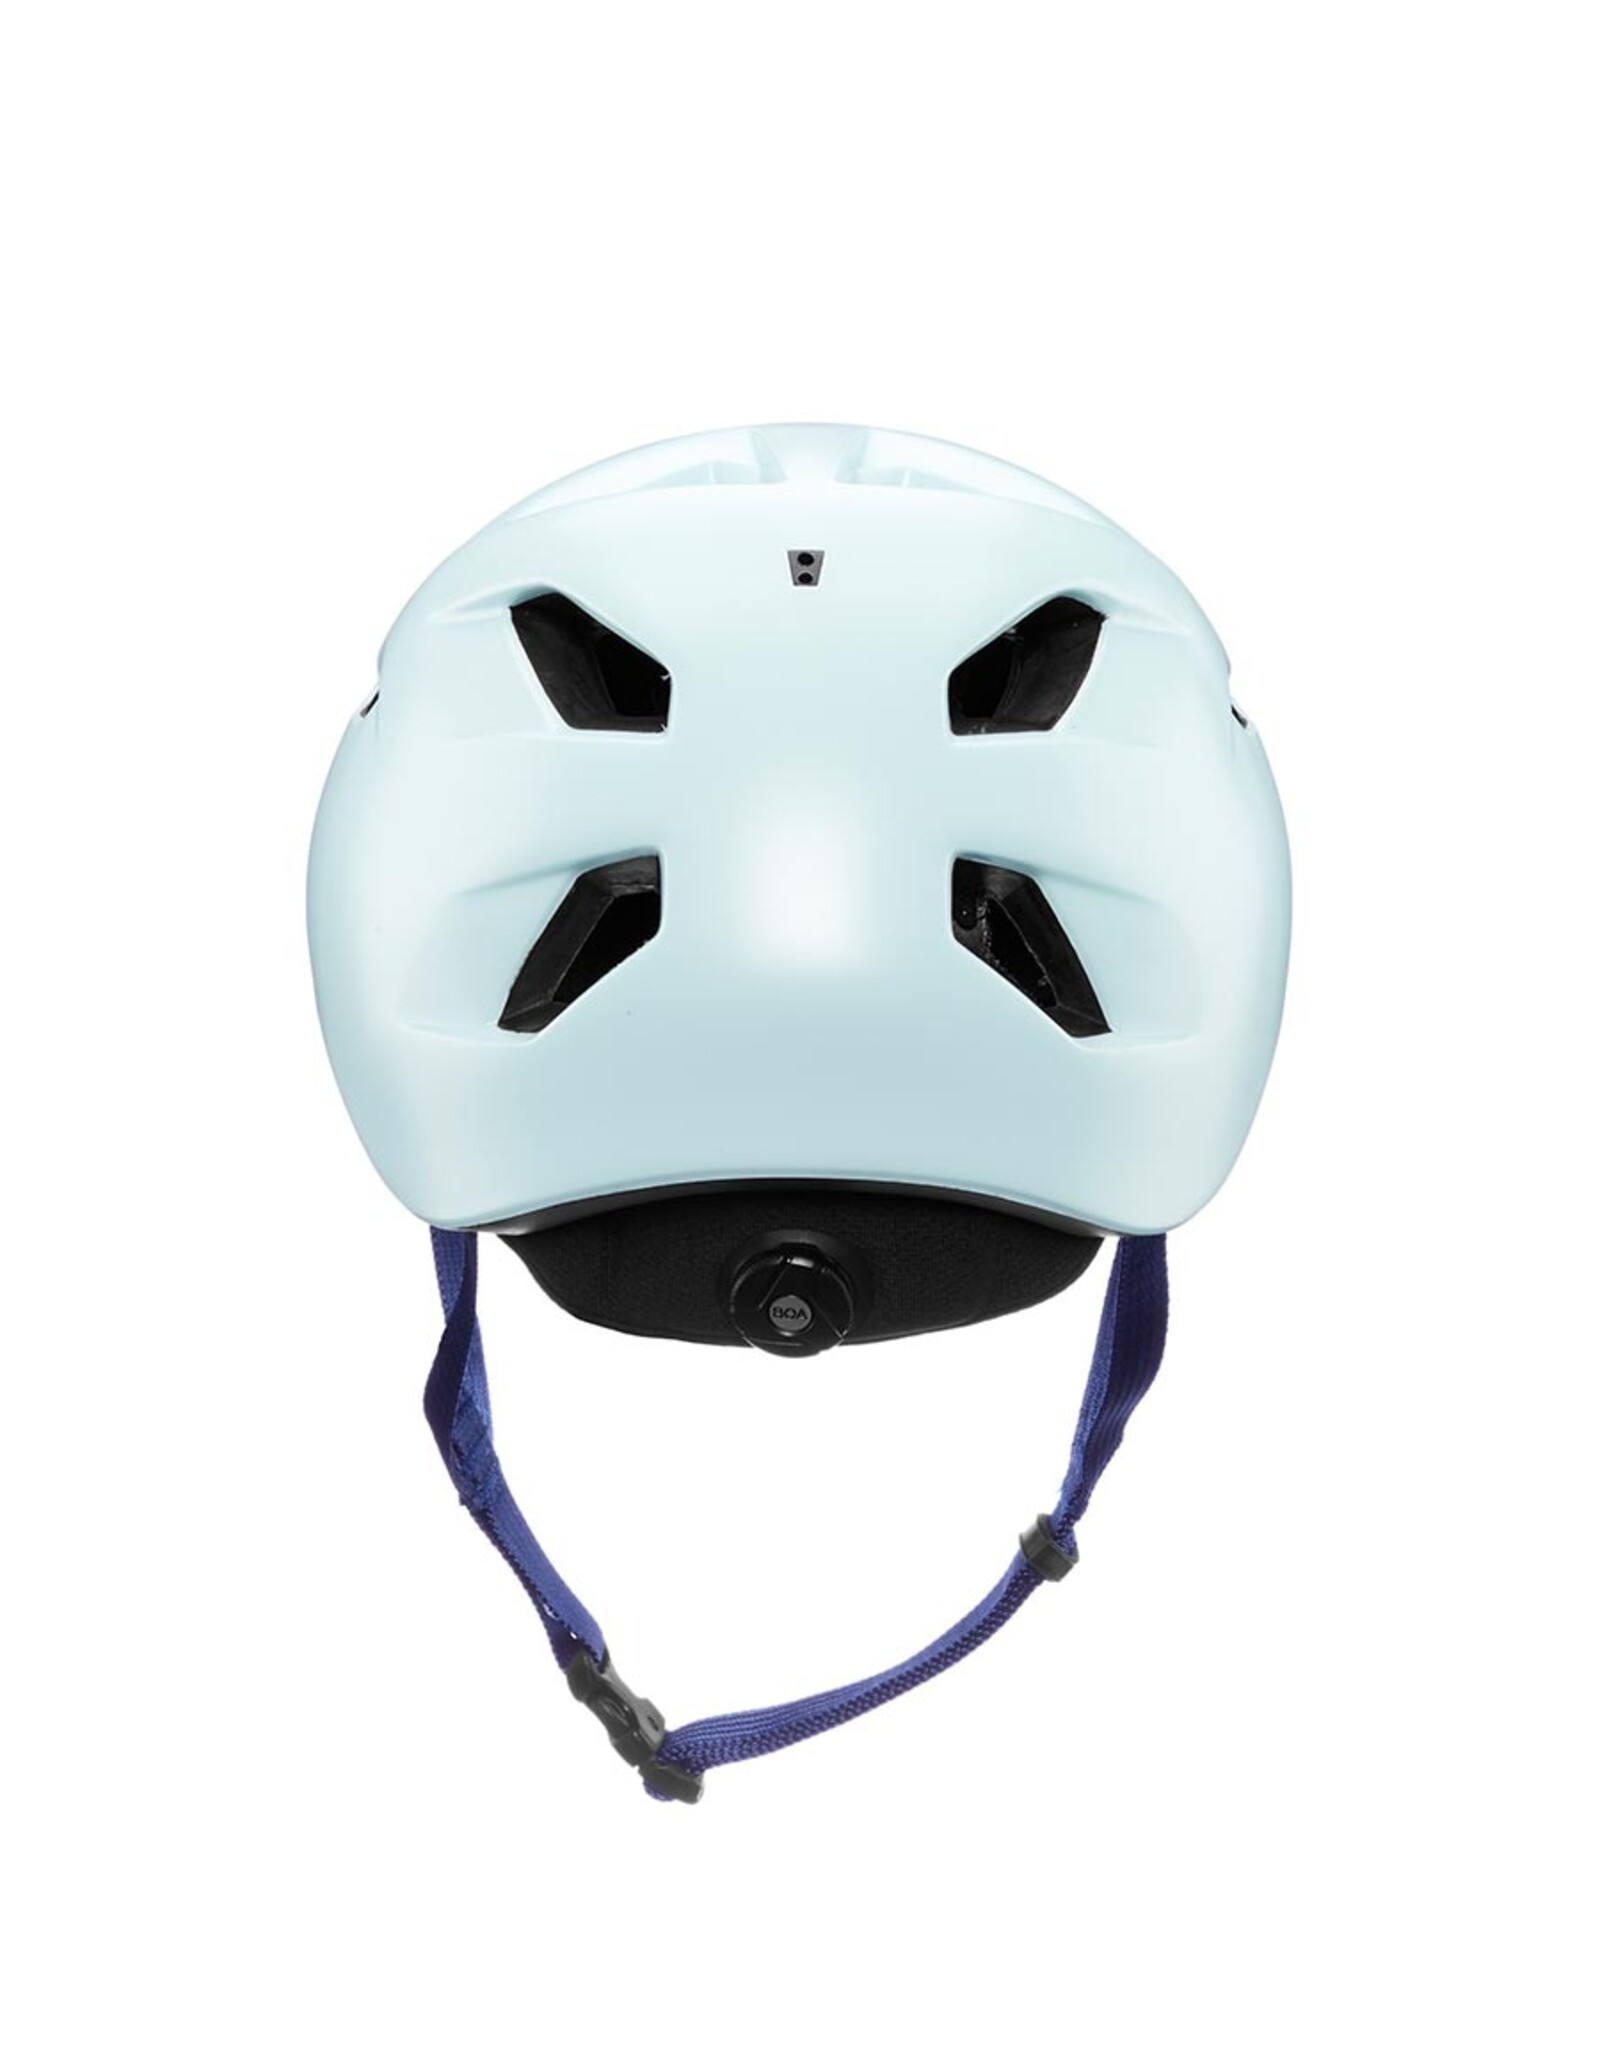 Bern Helmet Allston